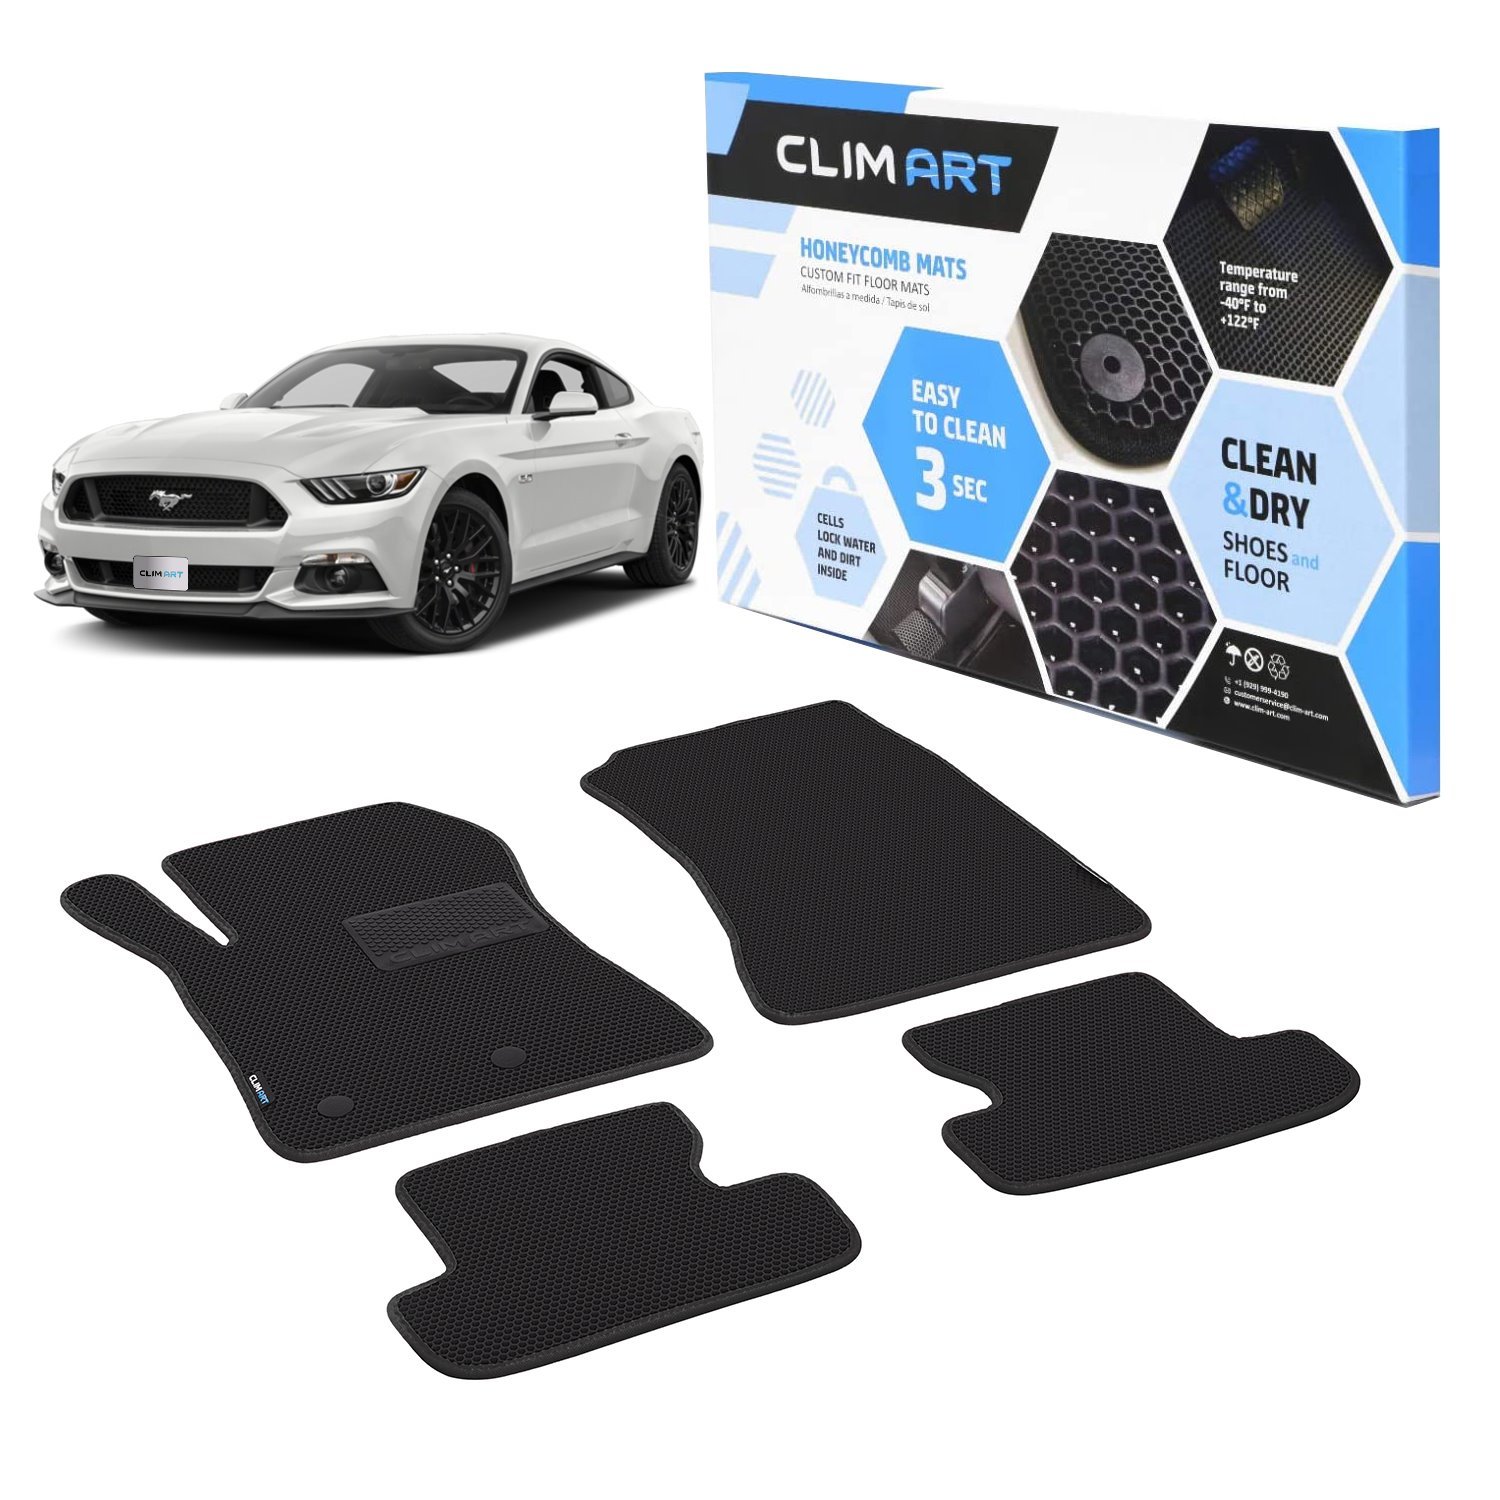 CLIM ART Honeycomb Custom Fit Floor Mats Fits Select Ford Mustang